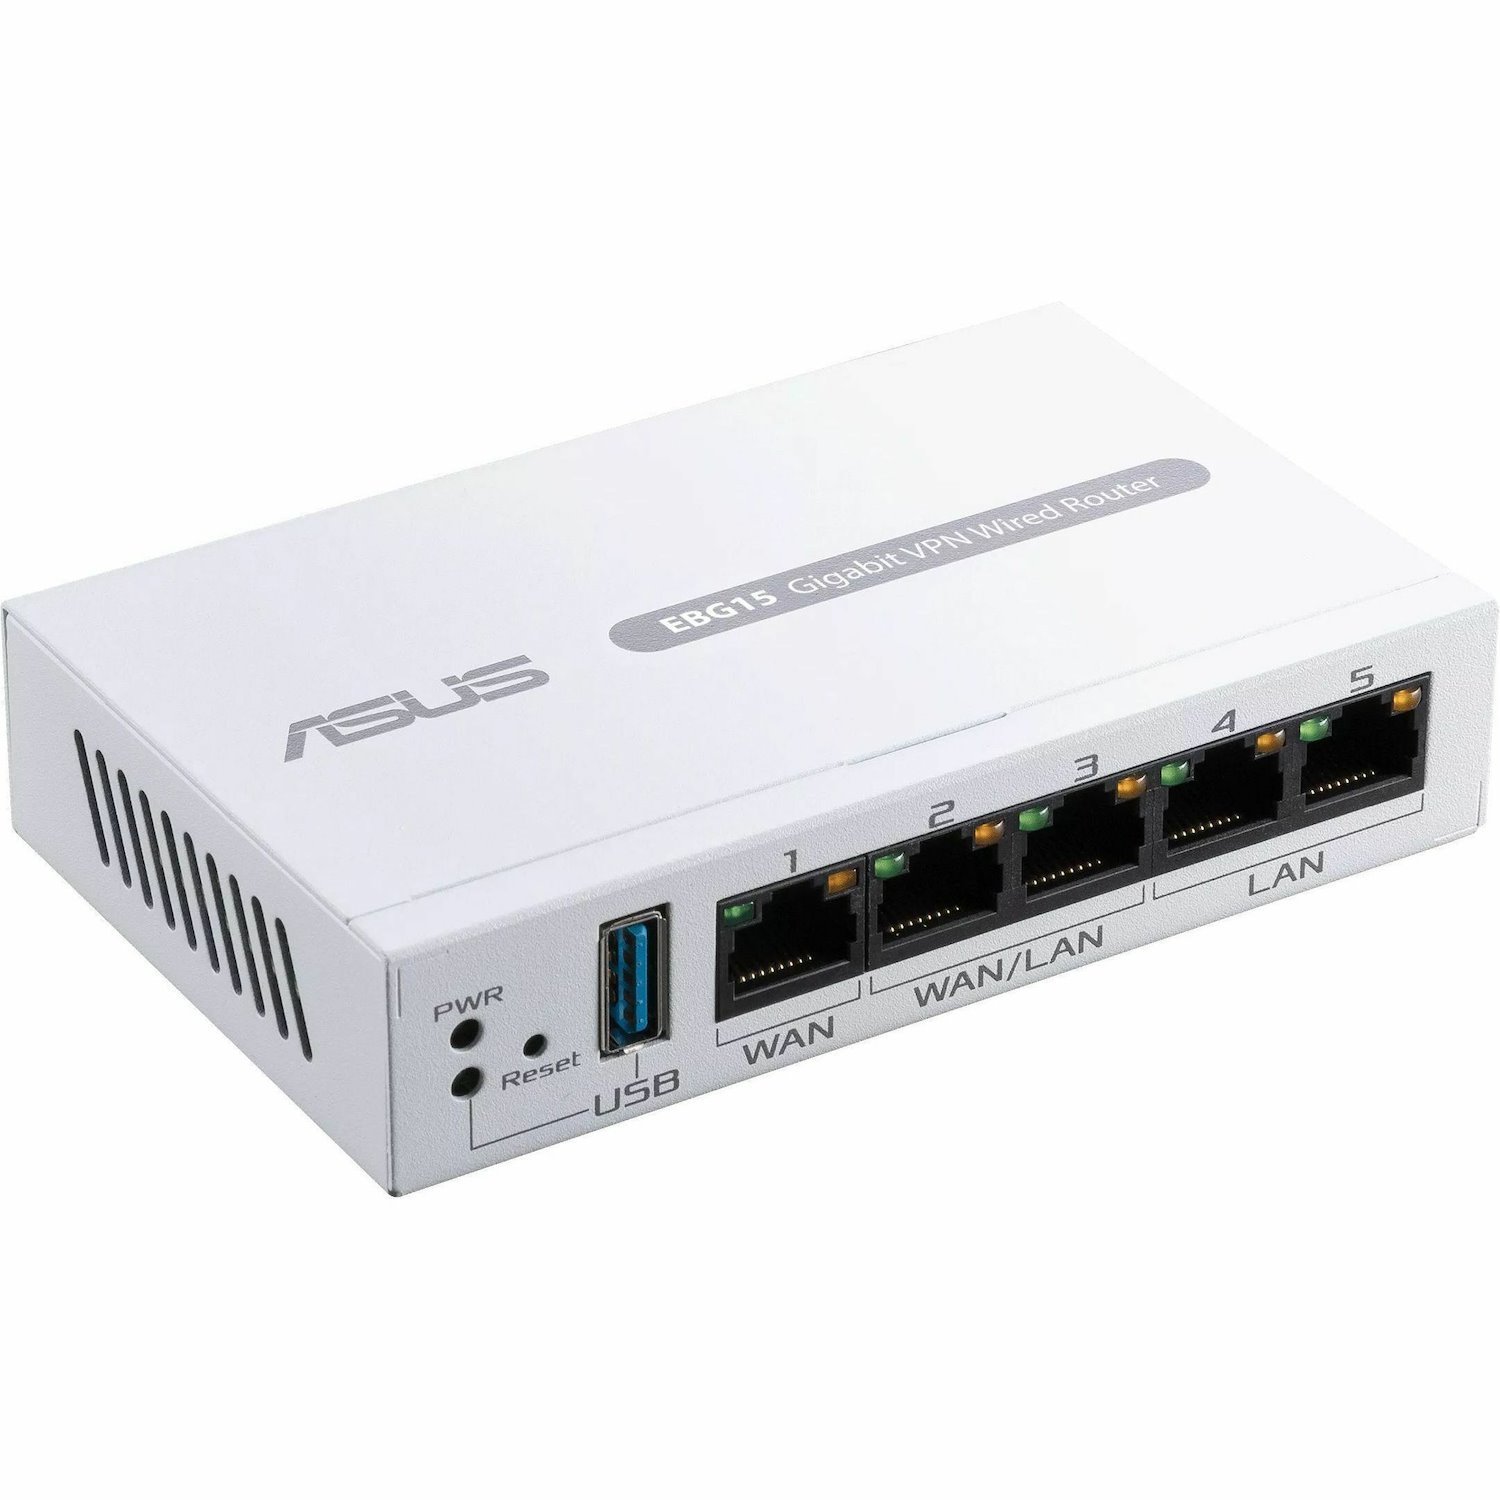 Asus ExpertWiFi EBG15 Router